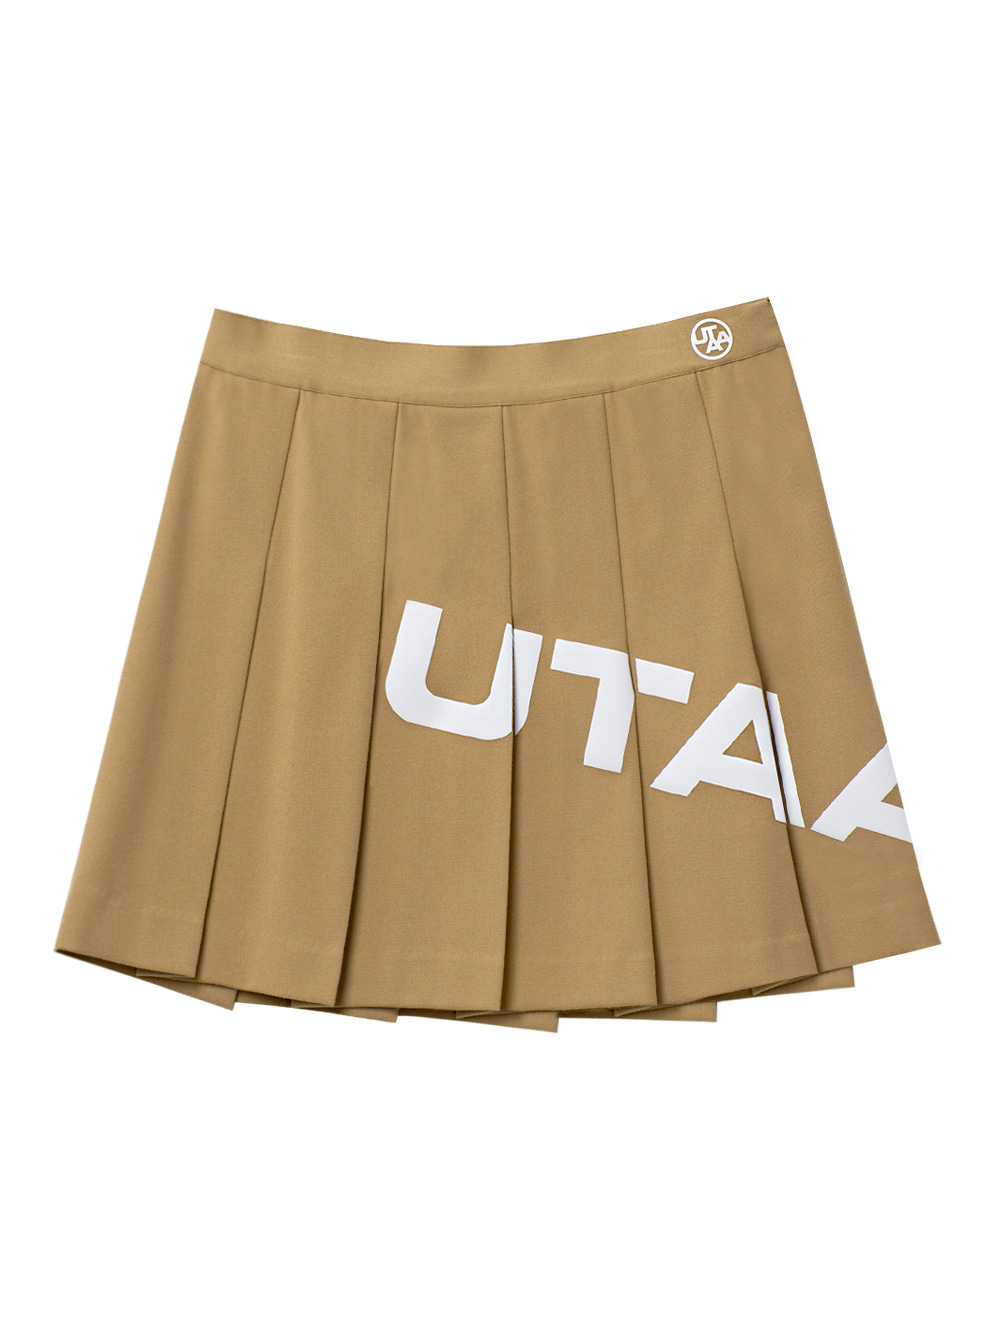 UTAA Bounce Logo Basic Skirt : Beige(UC1SKF763BE)